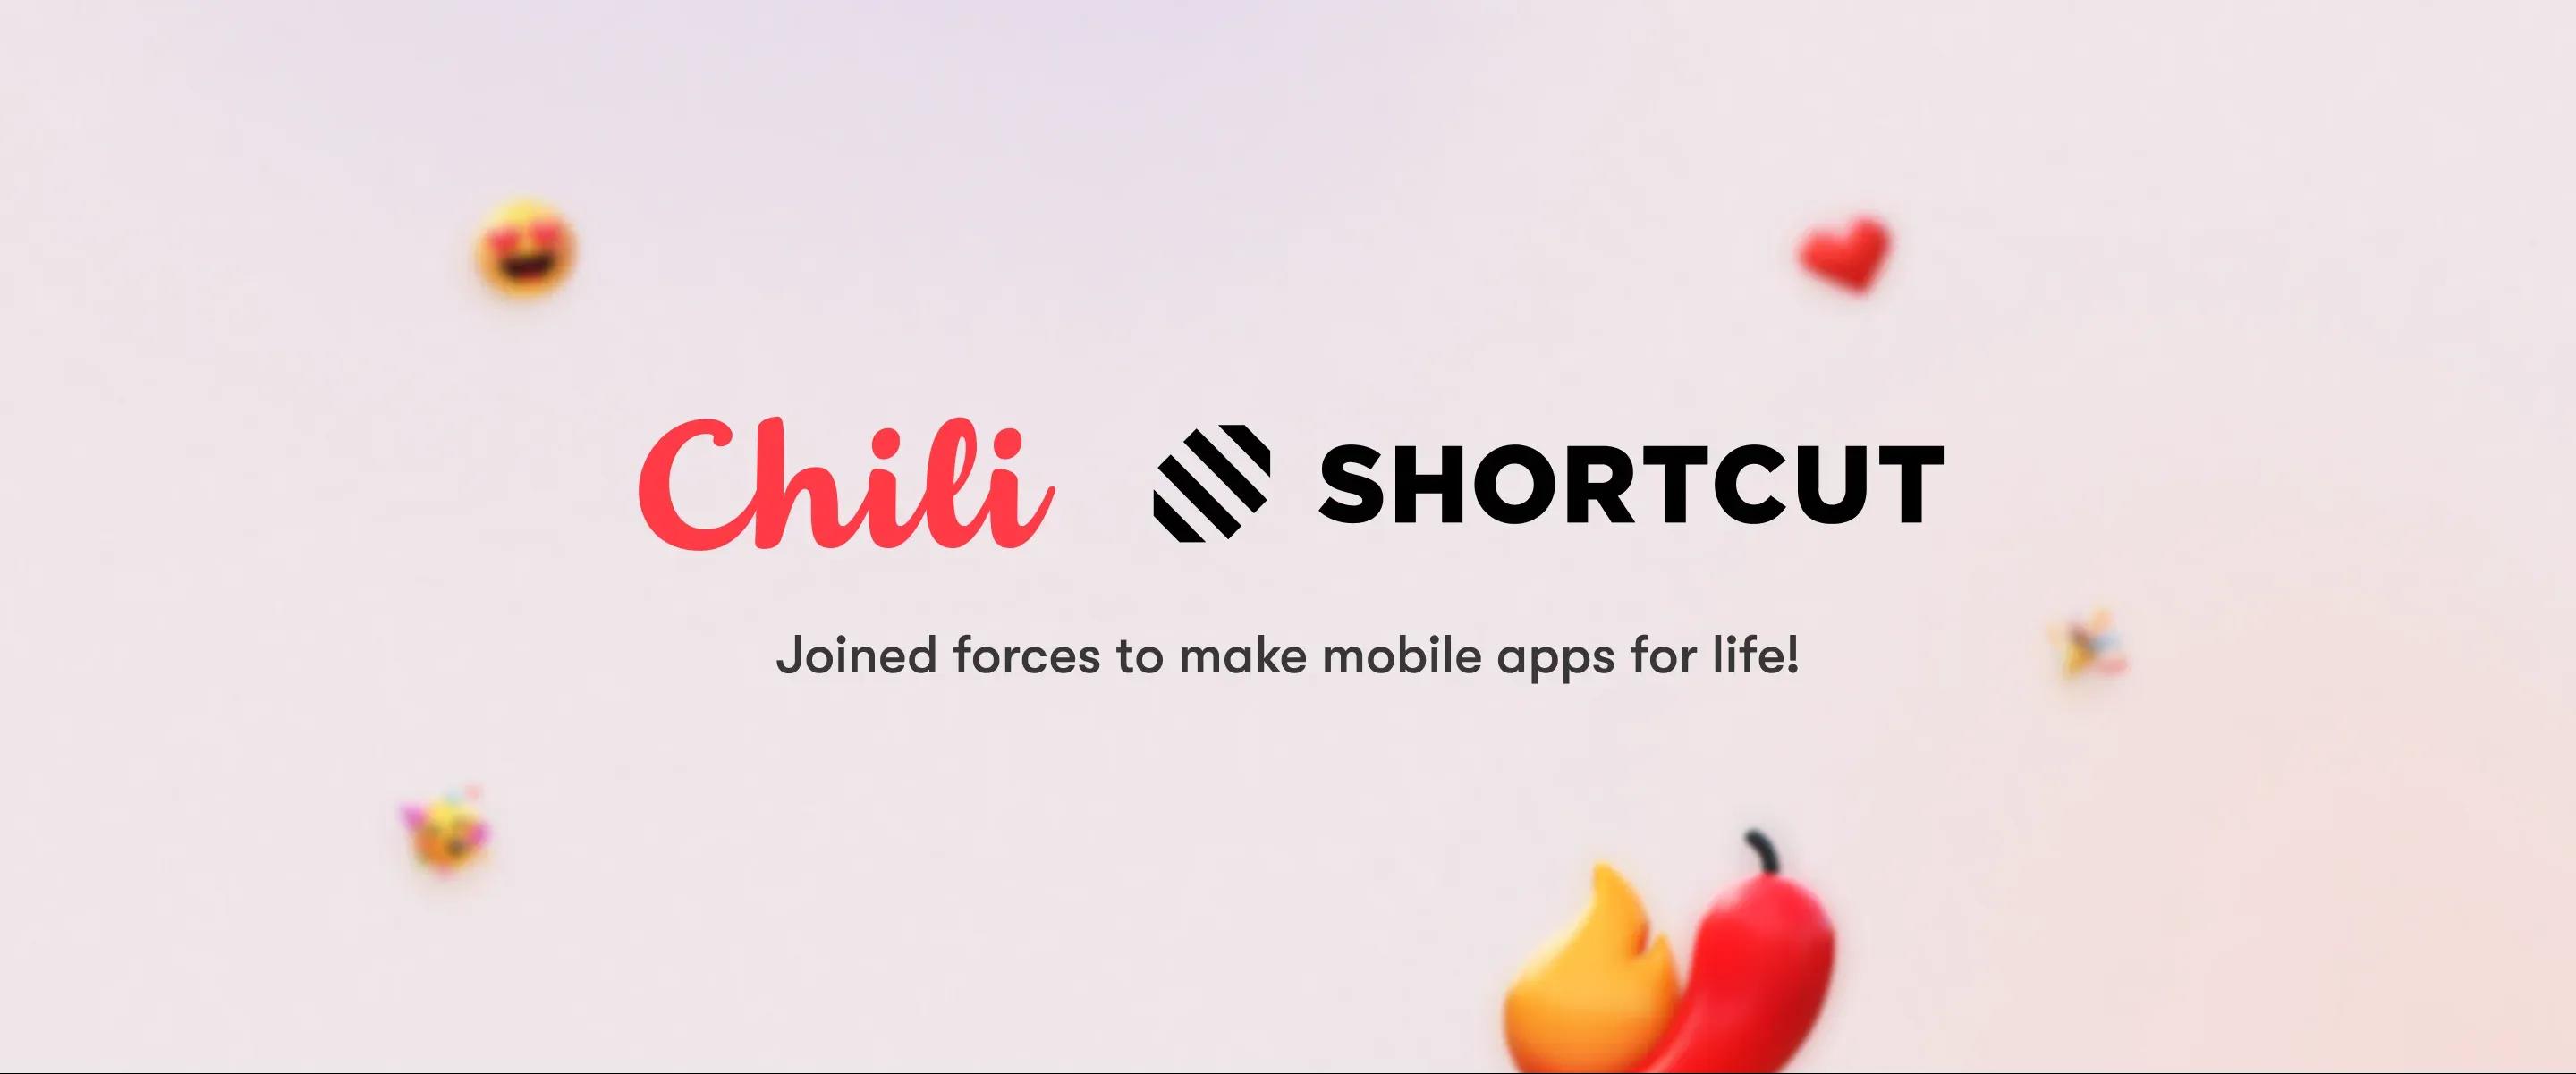 Chili shortcut